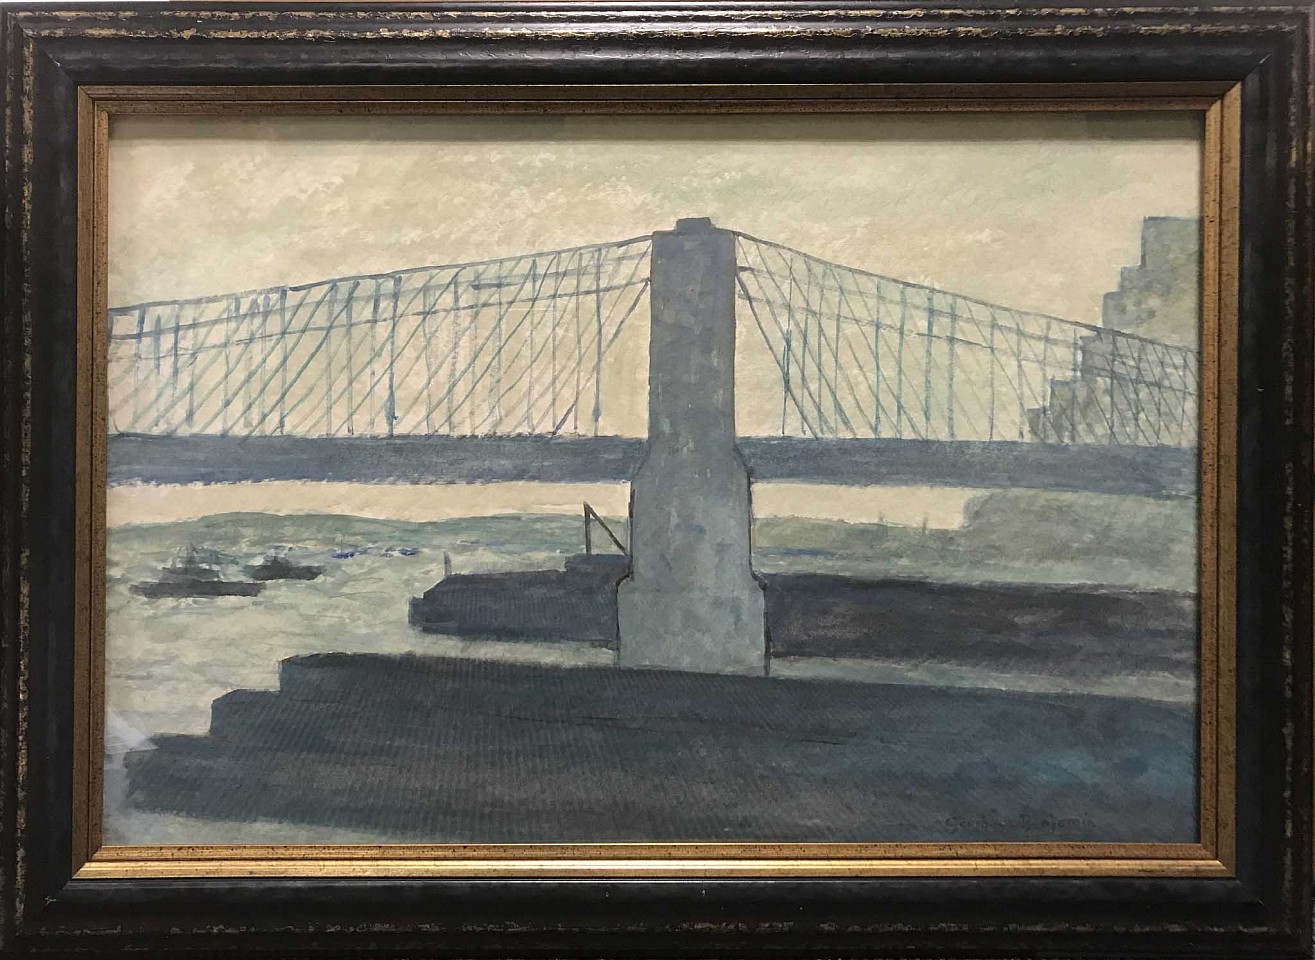 Gershon Benjamin, Brooklyn Bridge IV, 1950 ca
watercolor on paper, 24 x 36 in. (61 x 91.4 cm)
GB1803039